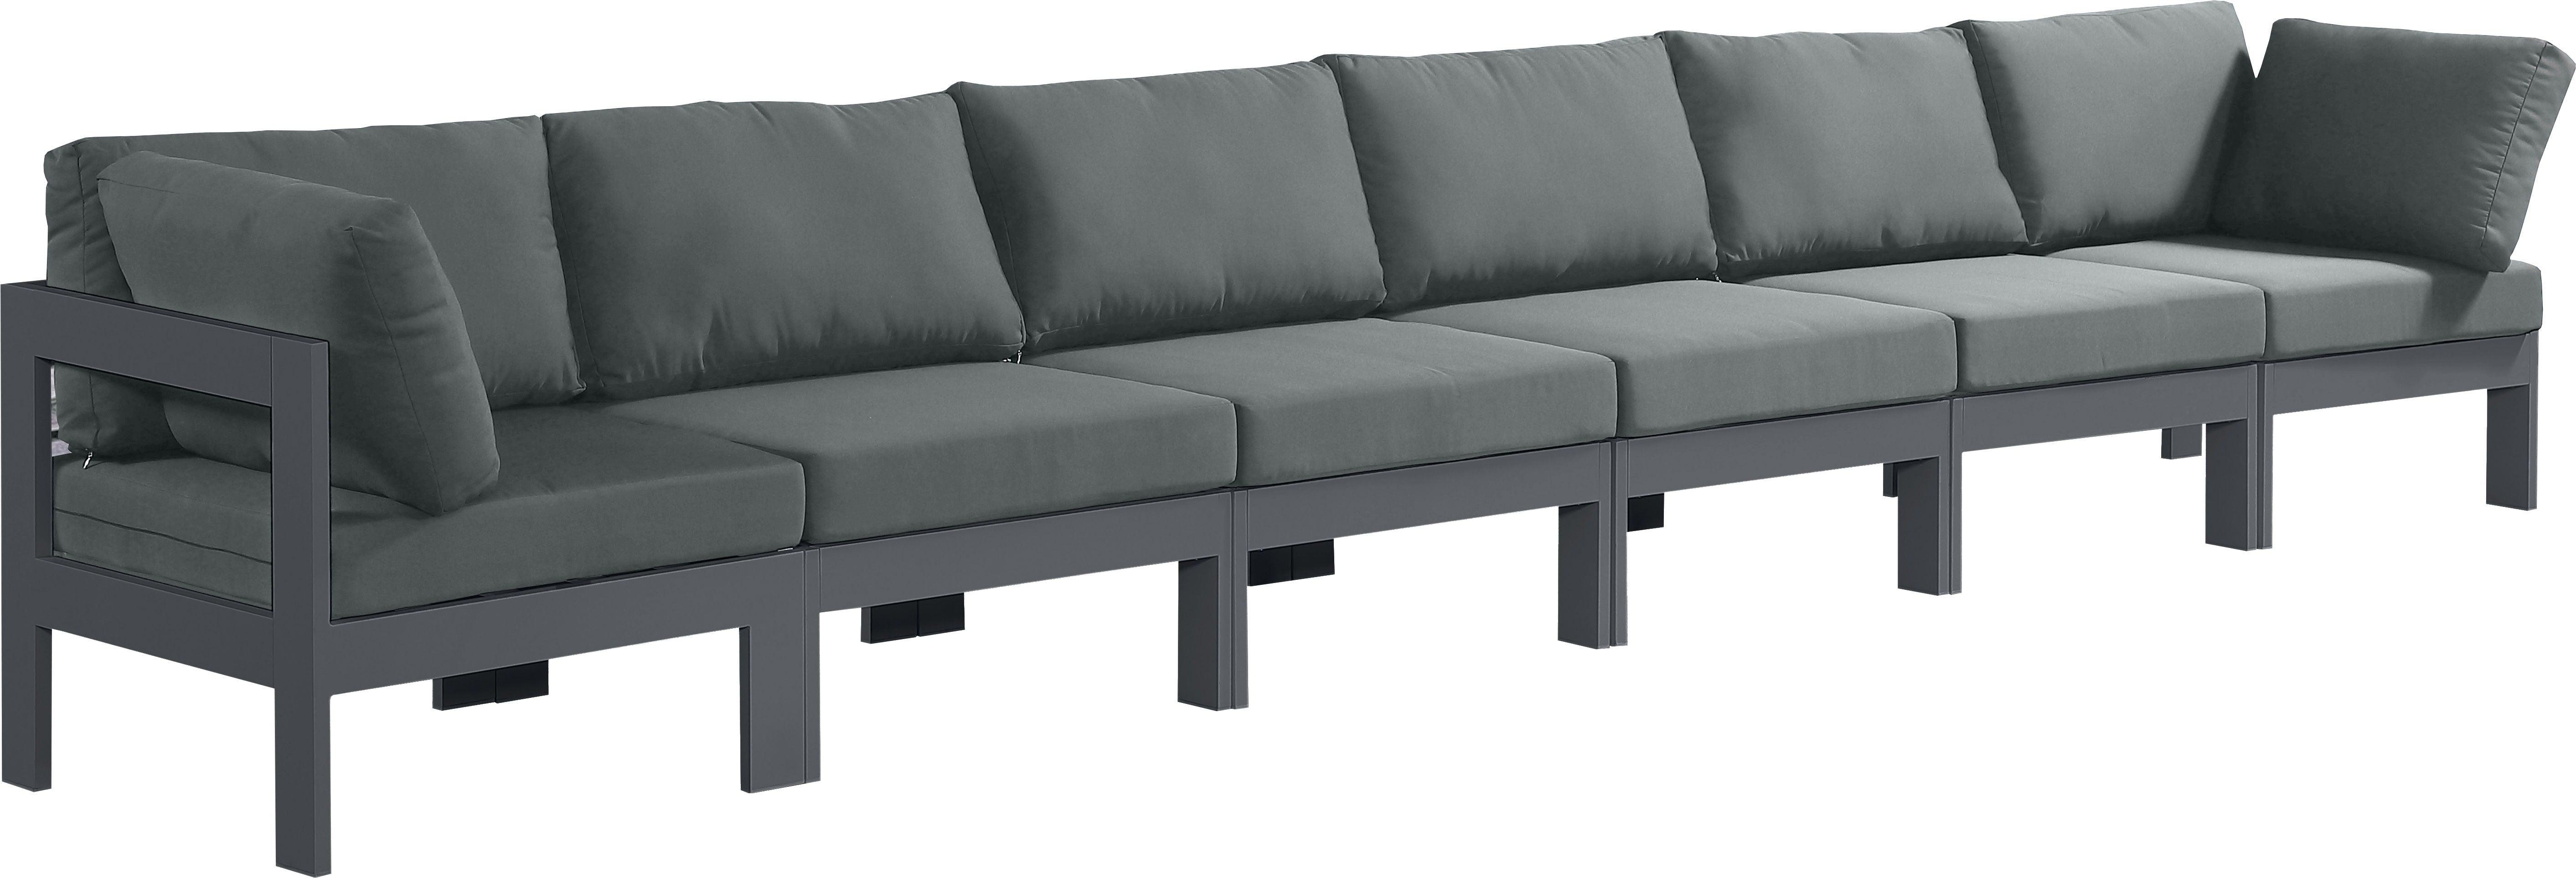 Meridian Furniture - Nizuc - Outdoor Patio Modular Sofa With Frame - Grey - With Frame - 5th Avenue Furniture